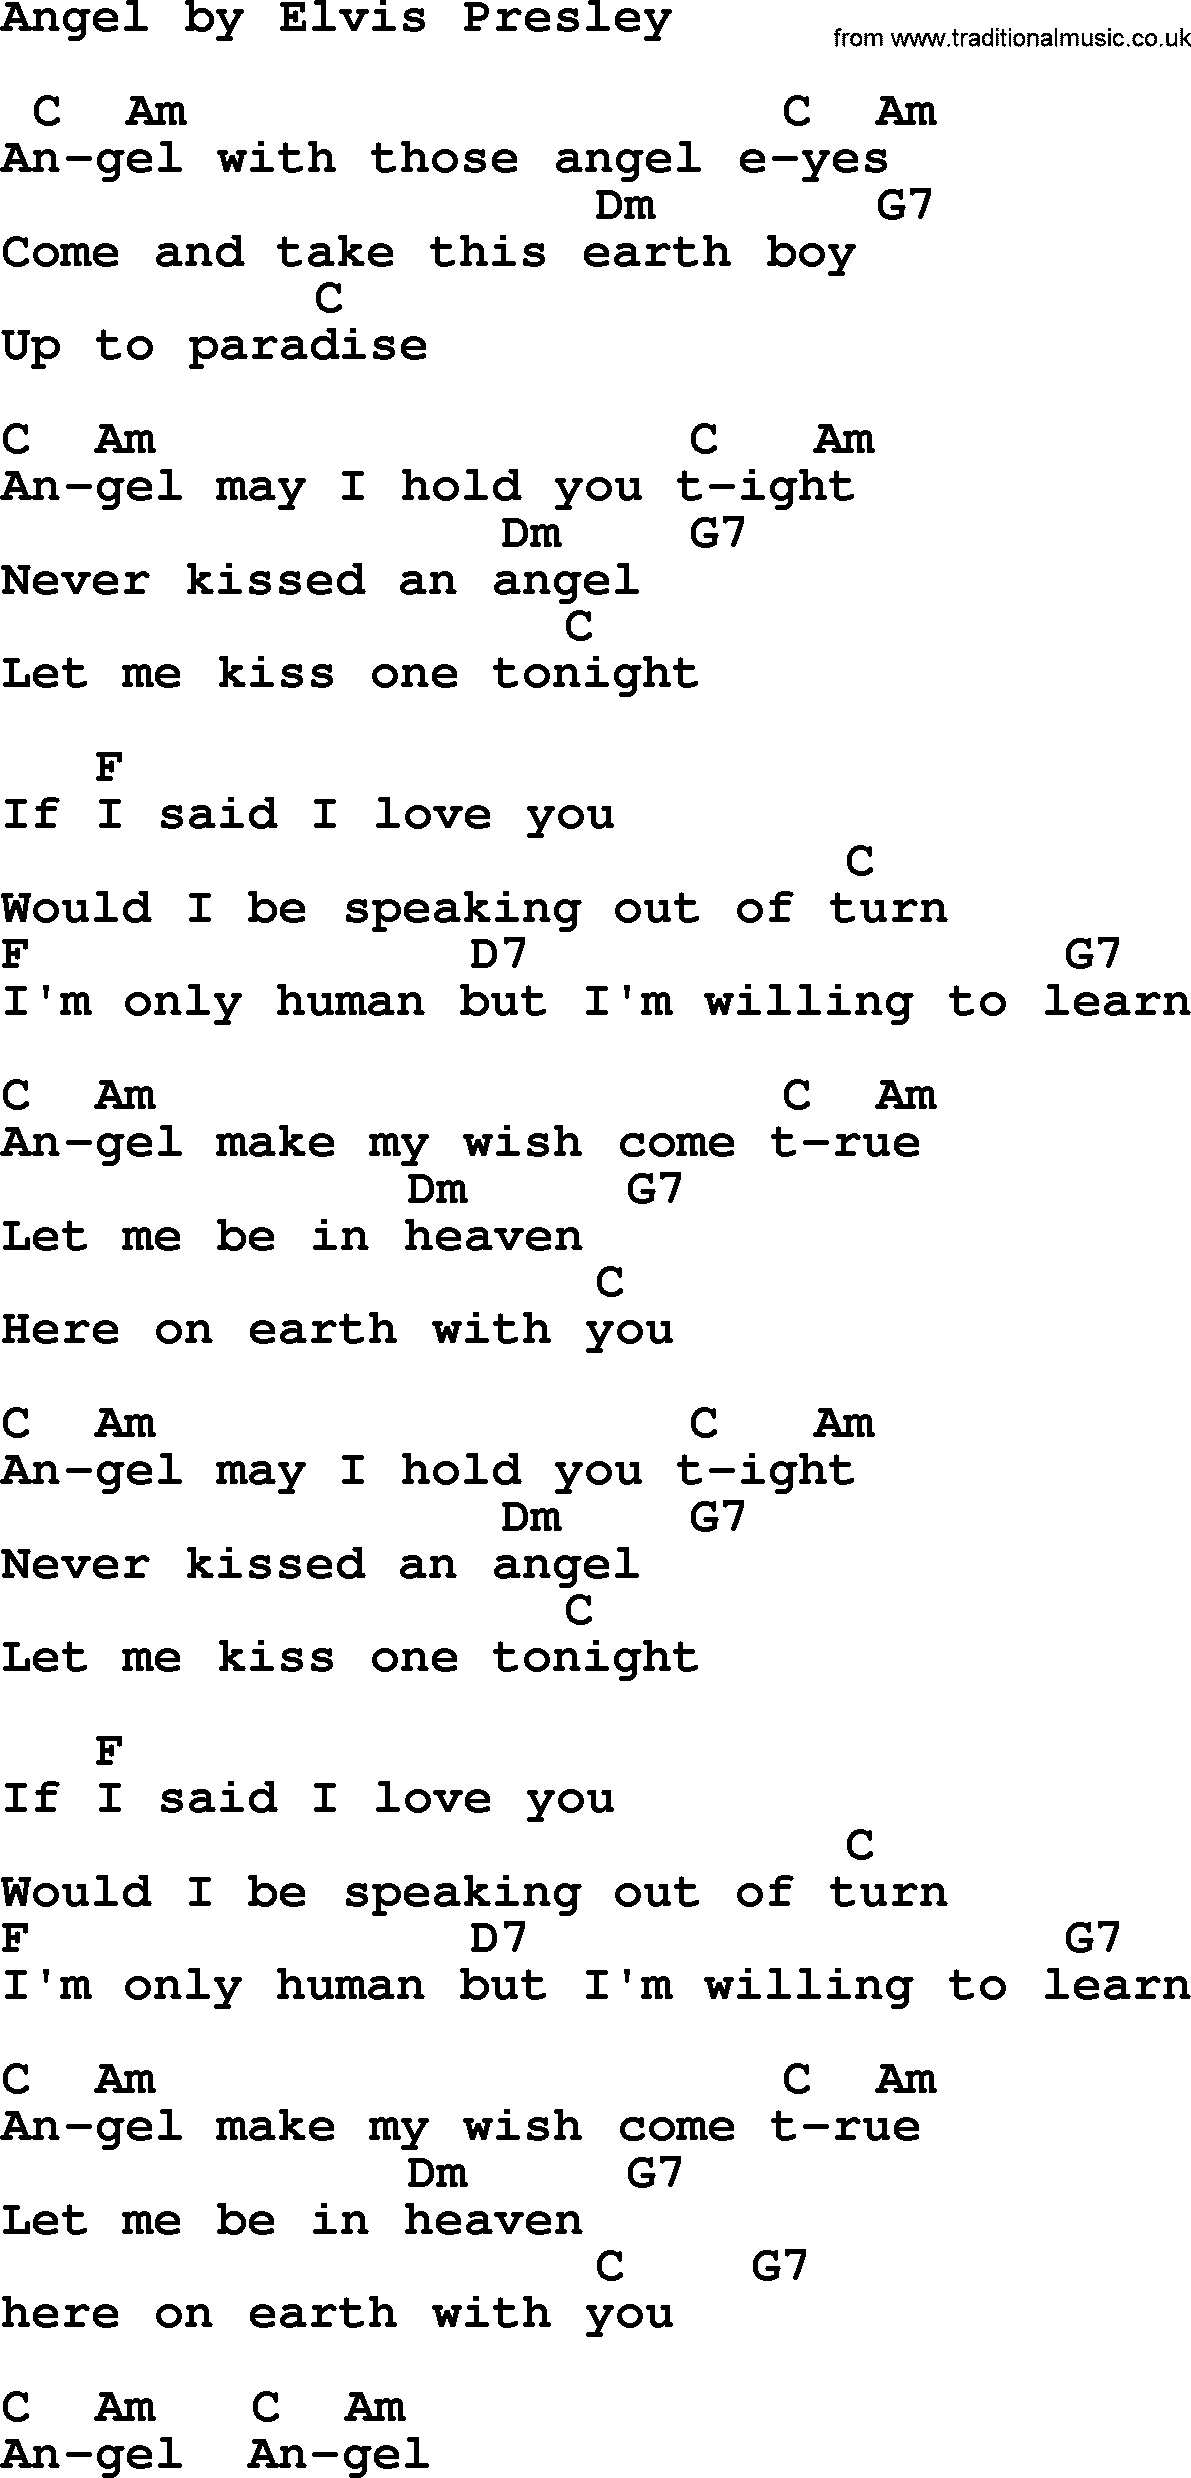 Elvis Presley song: Angel, lyrics and chords